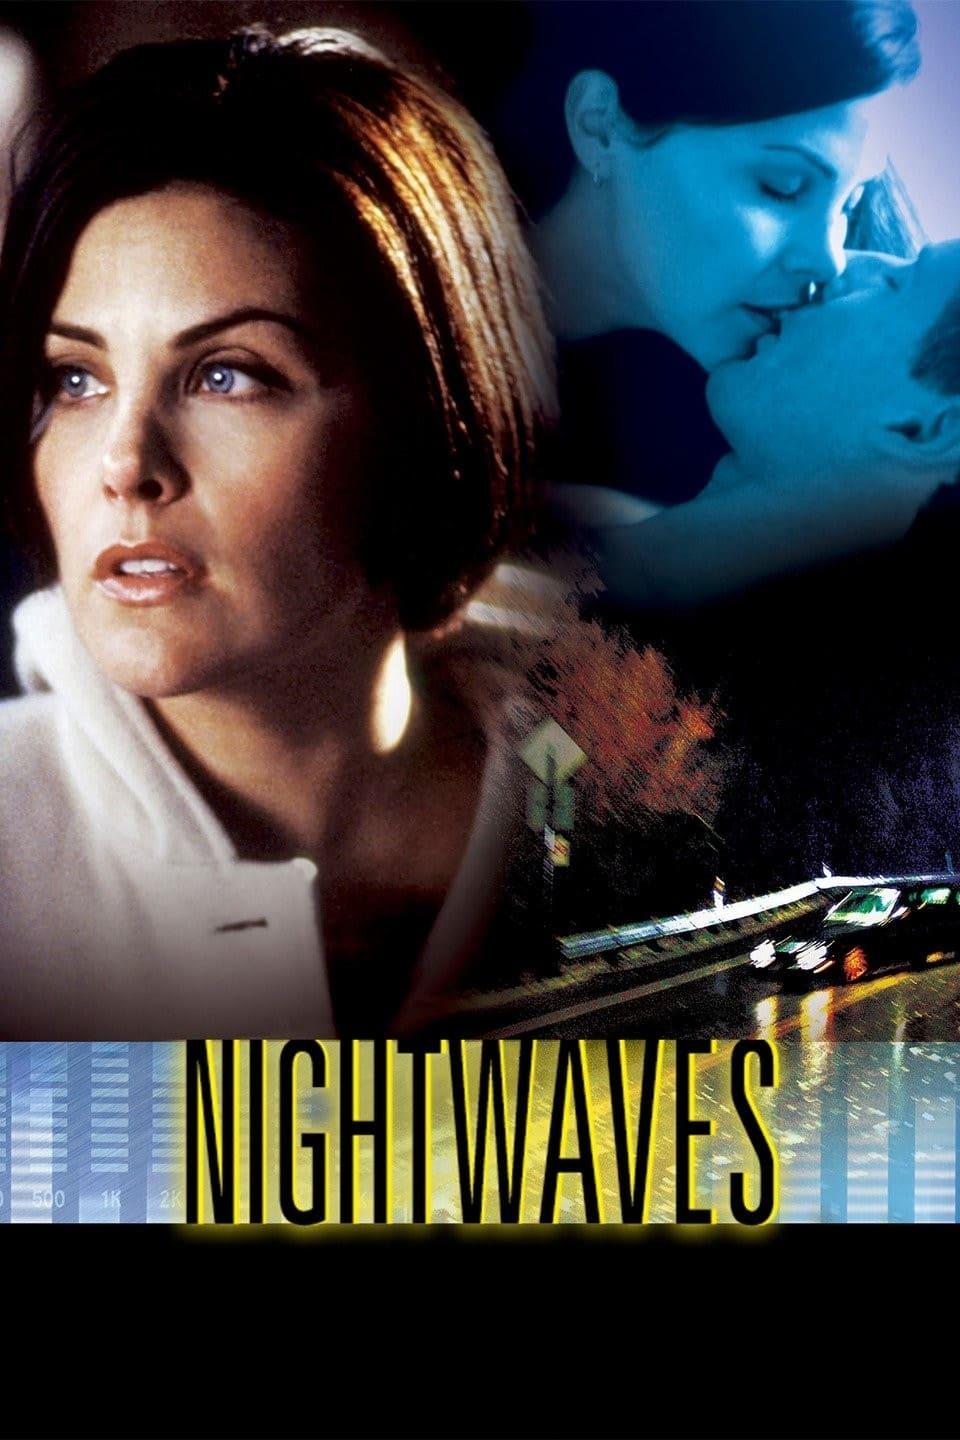 Nightwaves poster